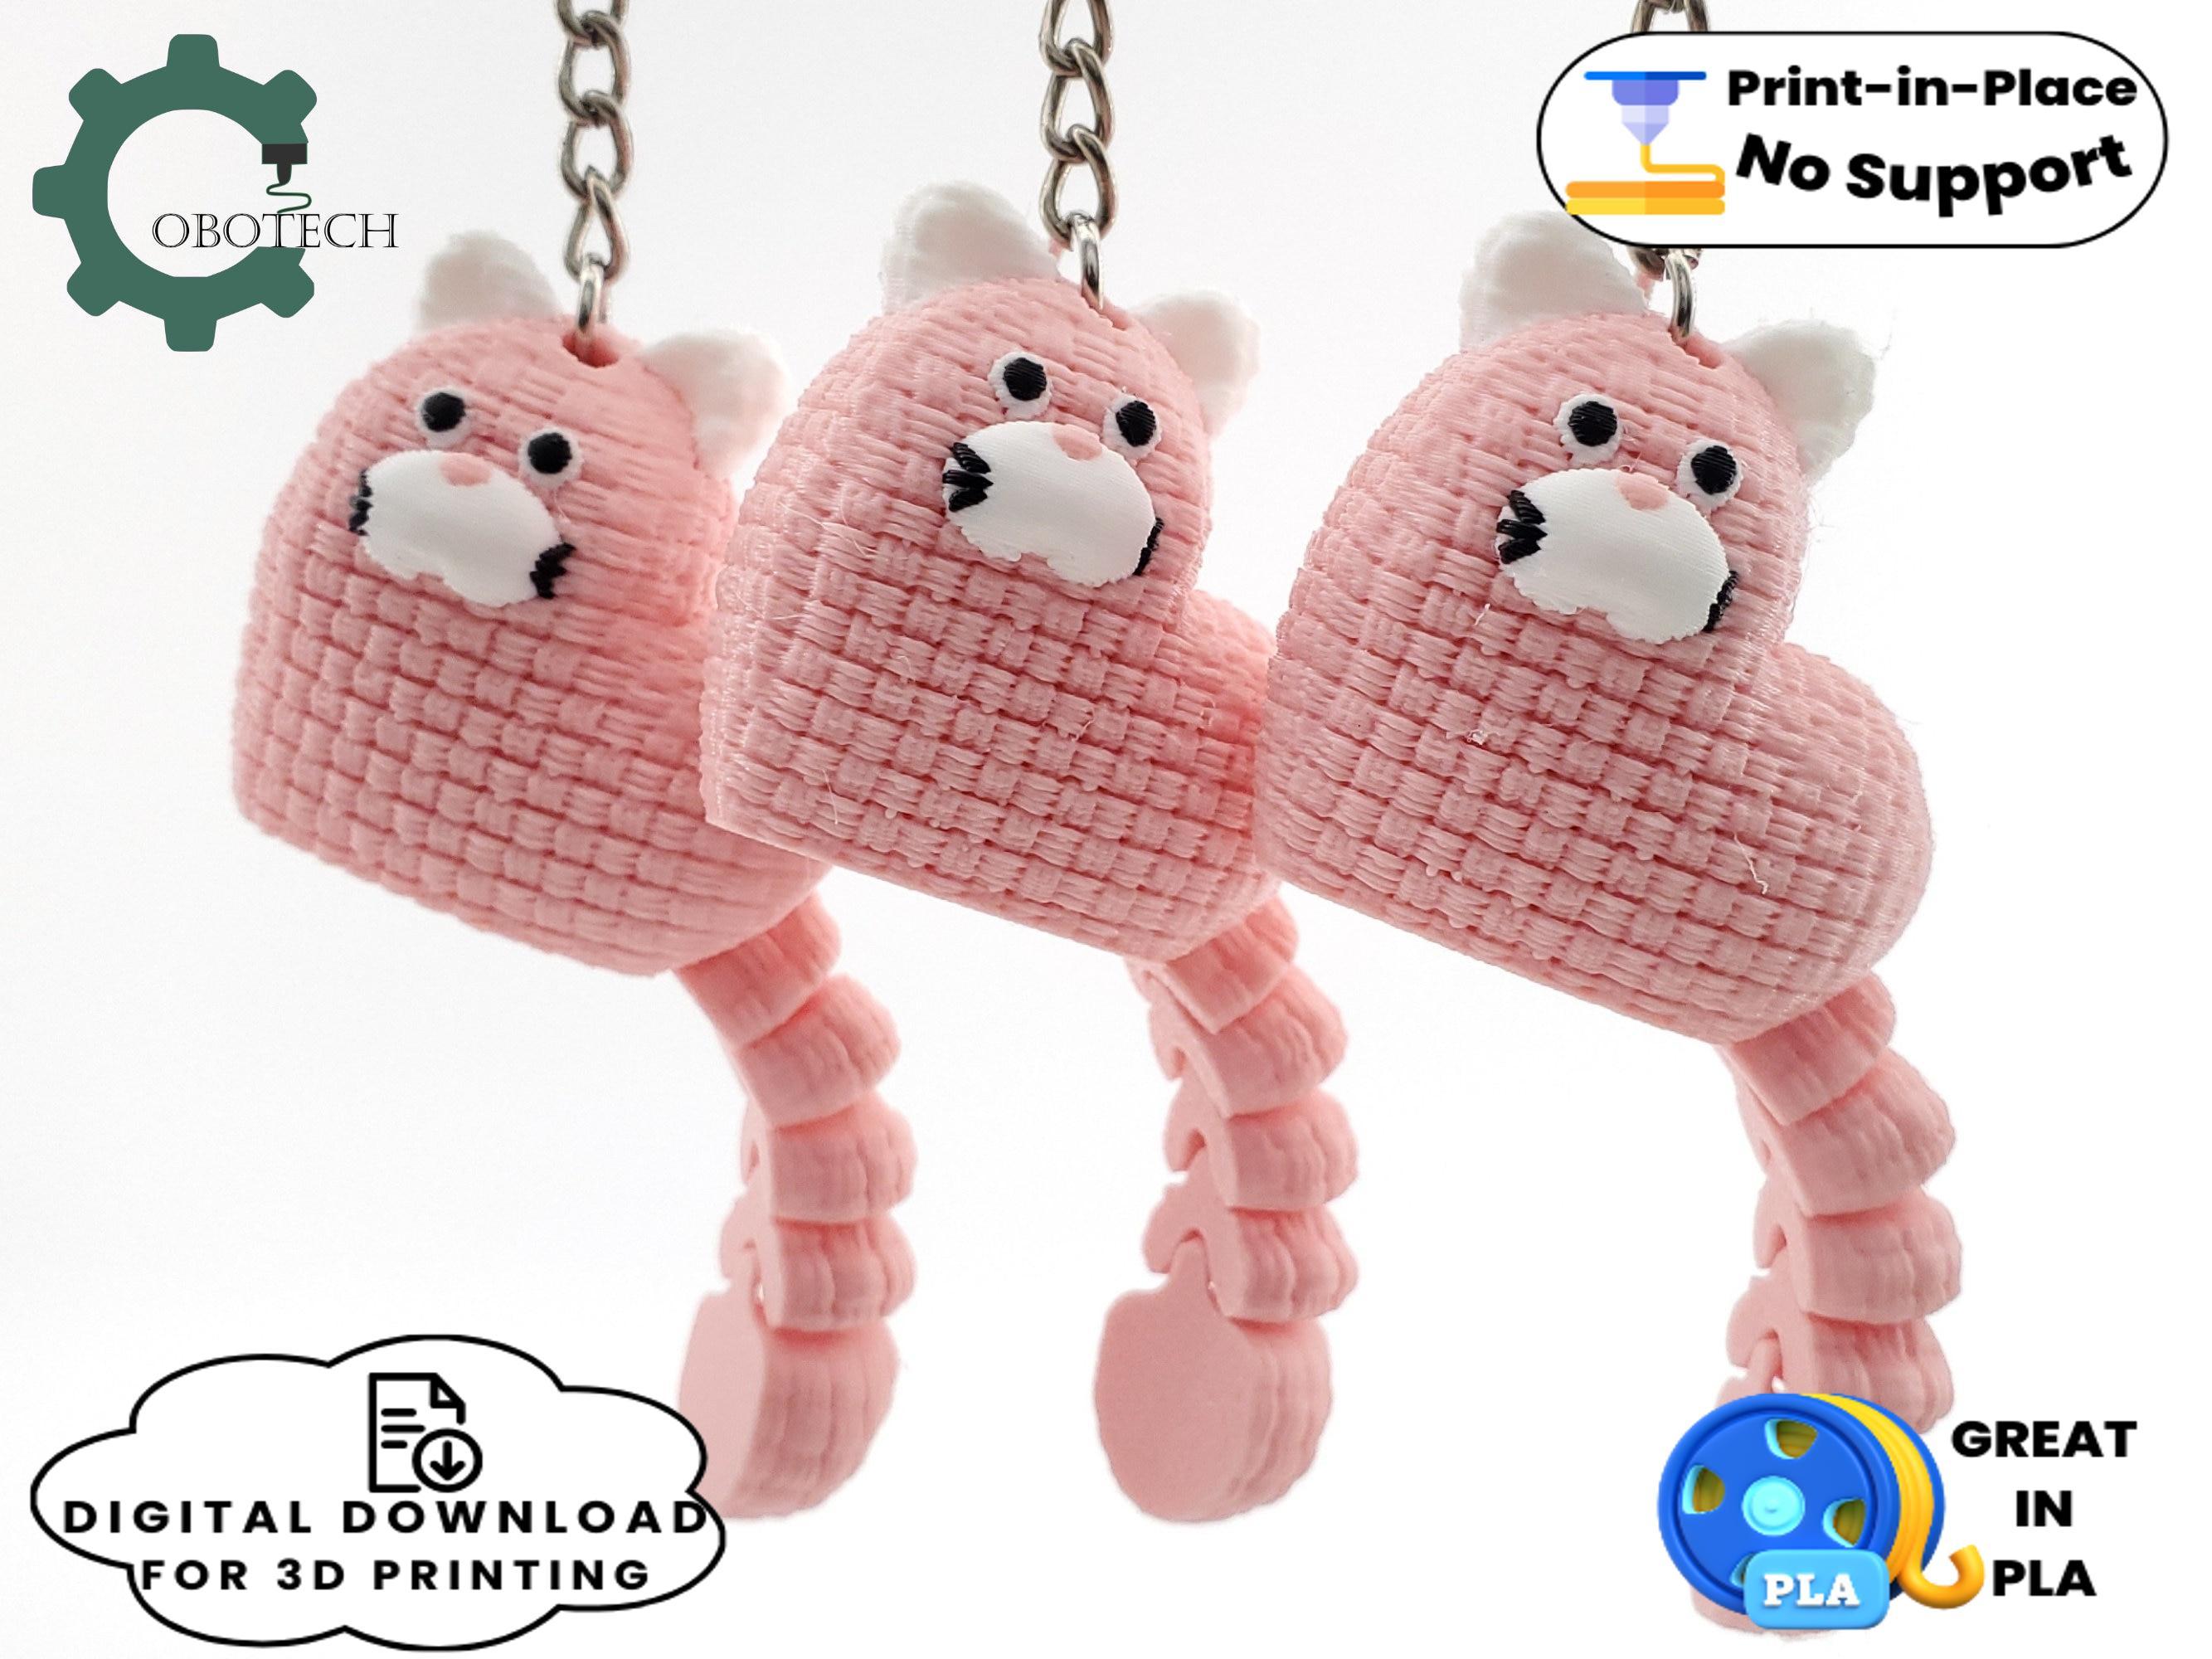 Cobotech Articulated Valentine Crochet Cat Keychain 3d model